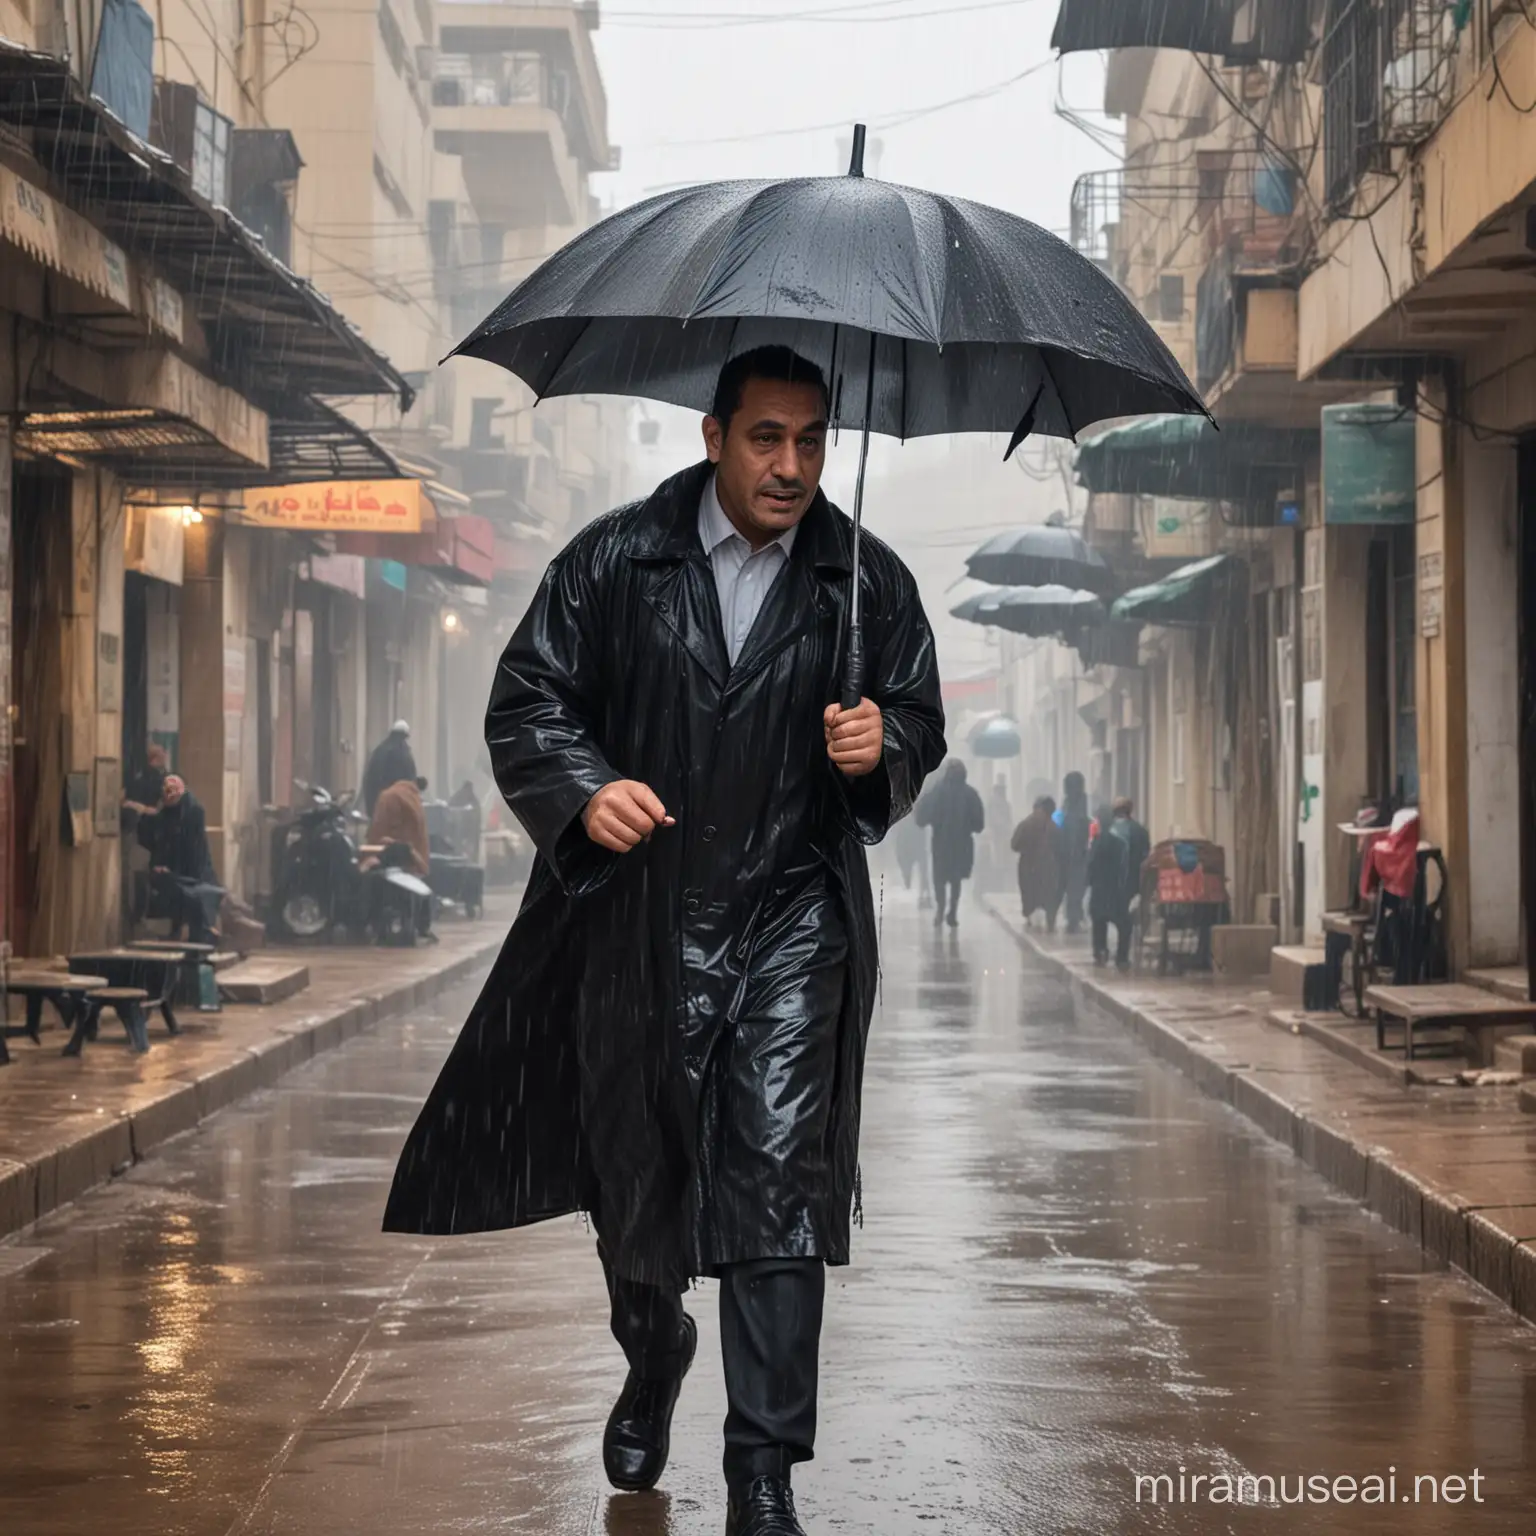 Egyptian Butcher with Umbrella in Winter Rain